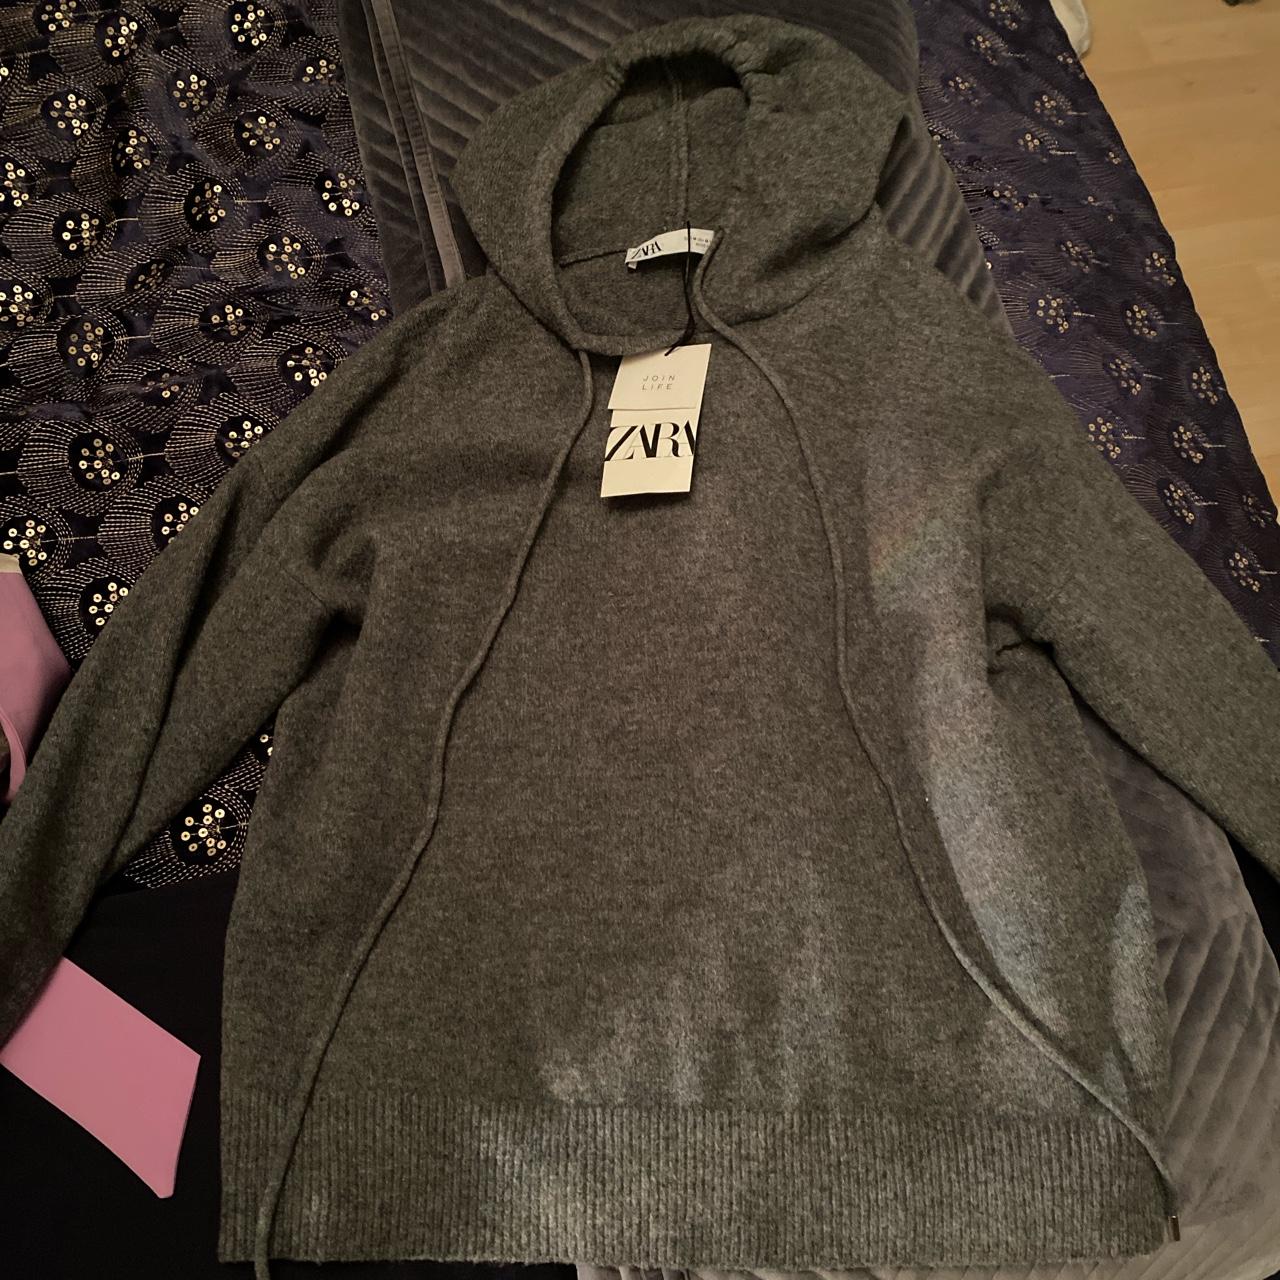 Zara brand new with tags knit hoodie. Size medium-... - Depop